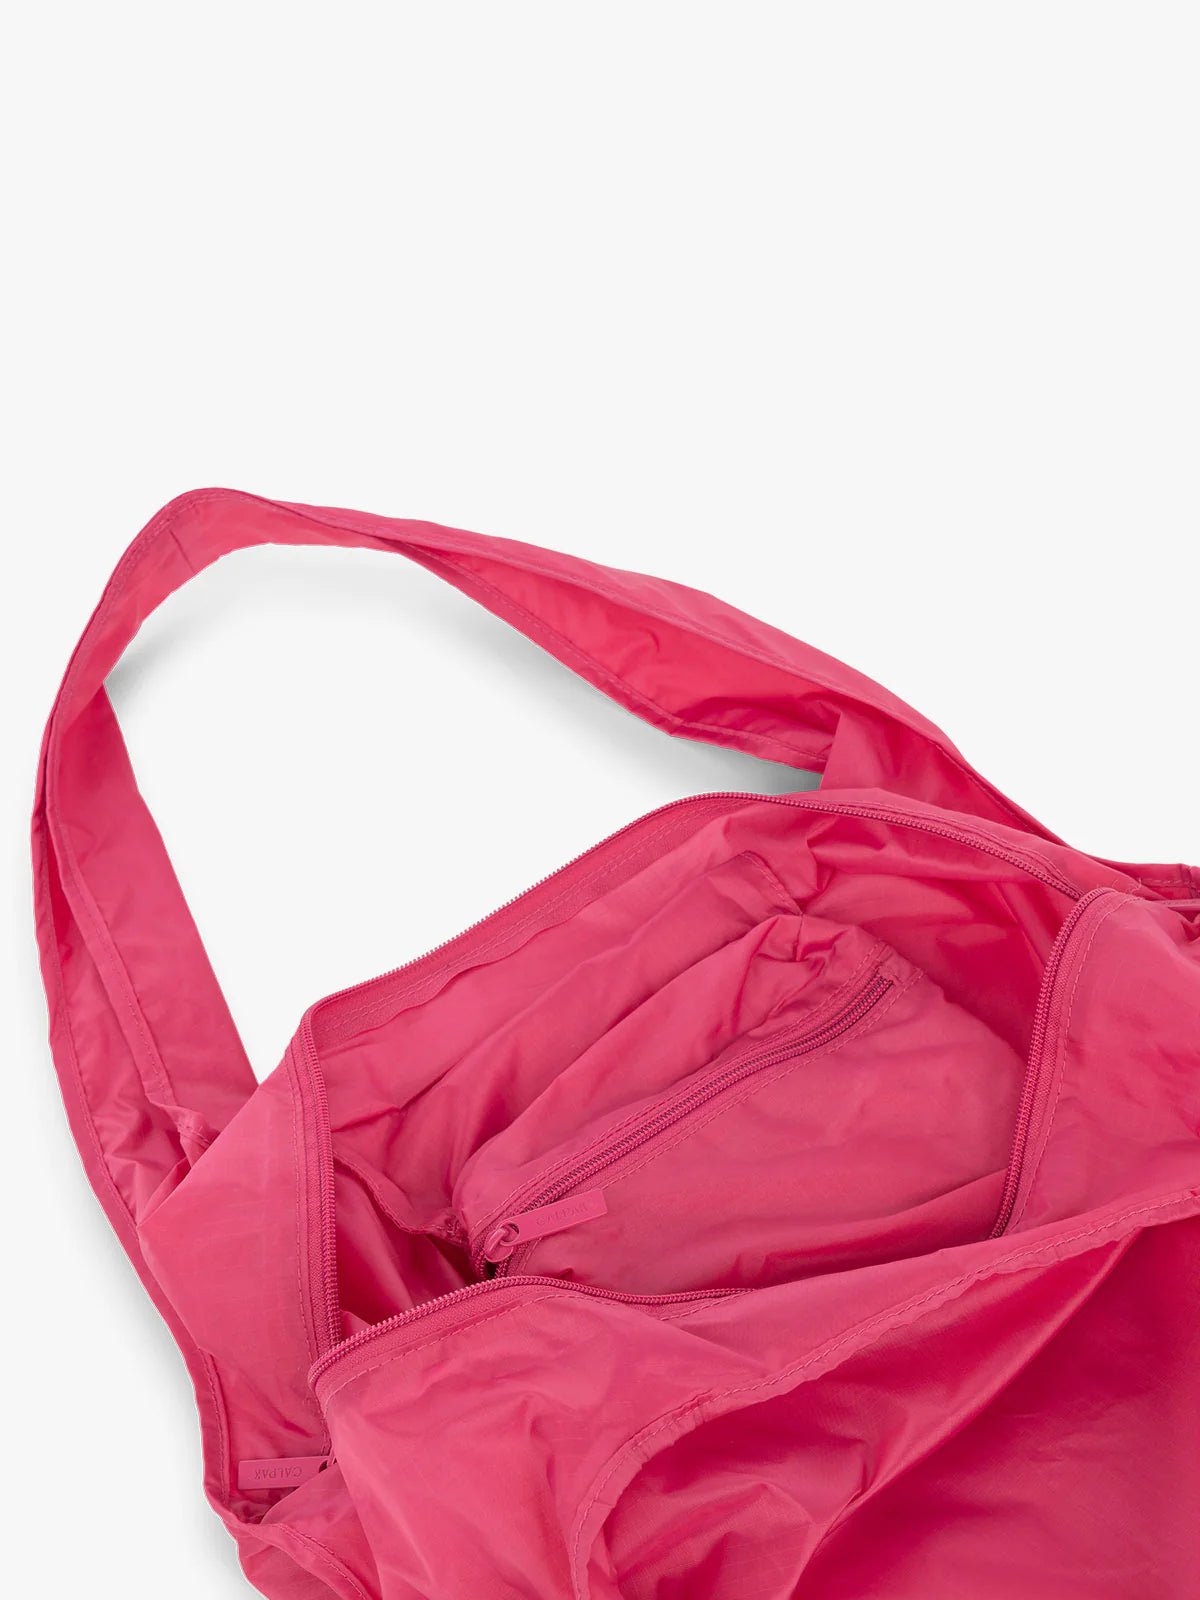 Pink dragonfruit compakt tote bag part of compakt duo